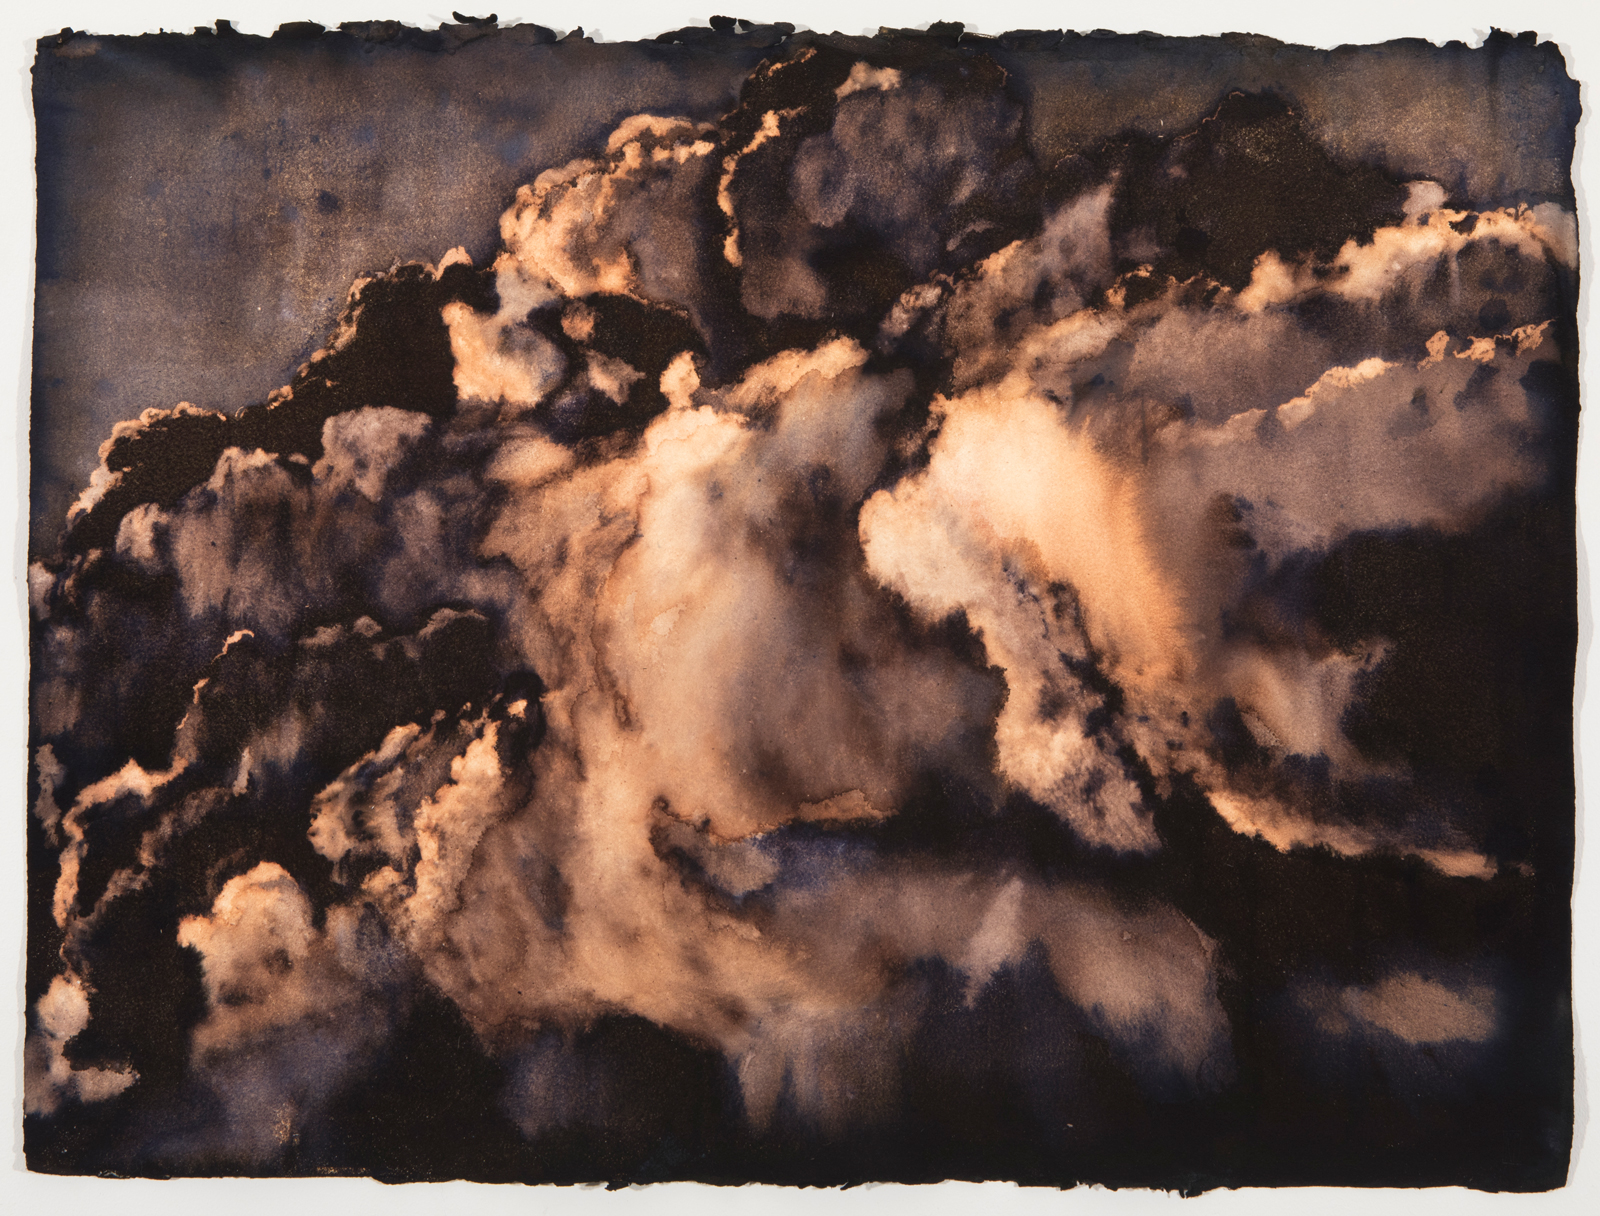 Turner’s Cloud